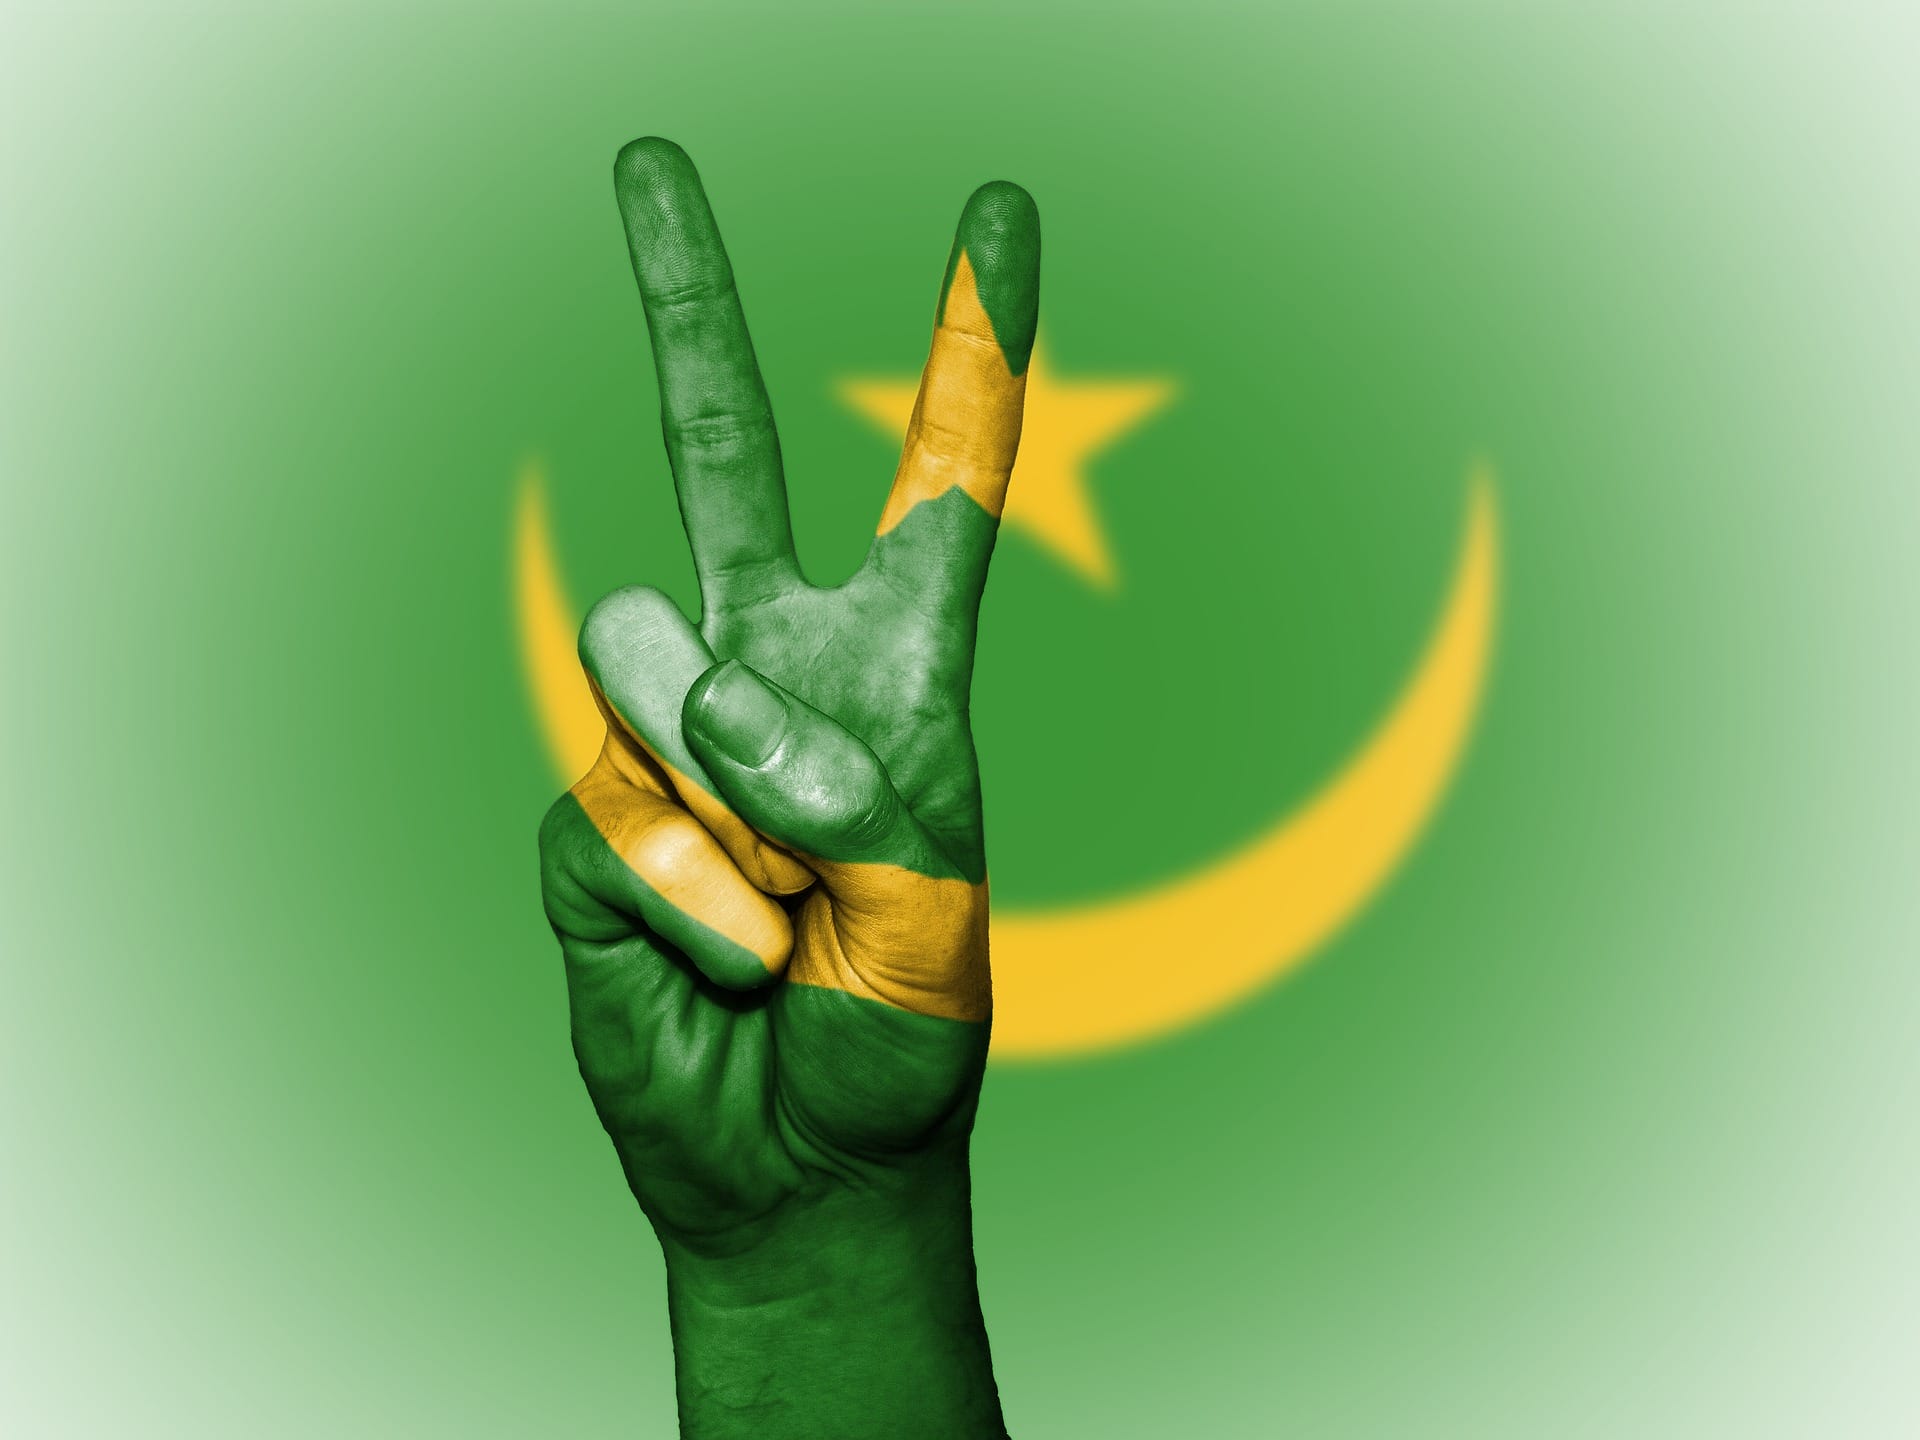 Mauritania love